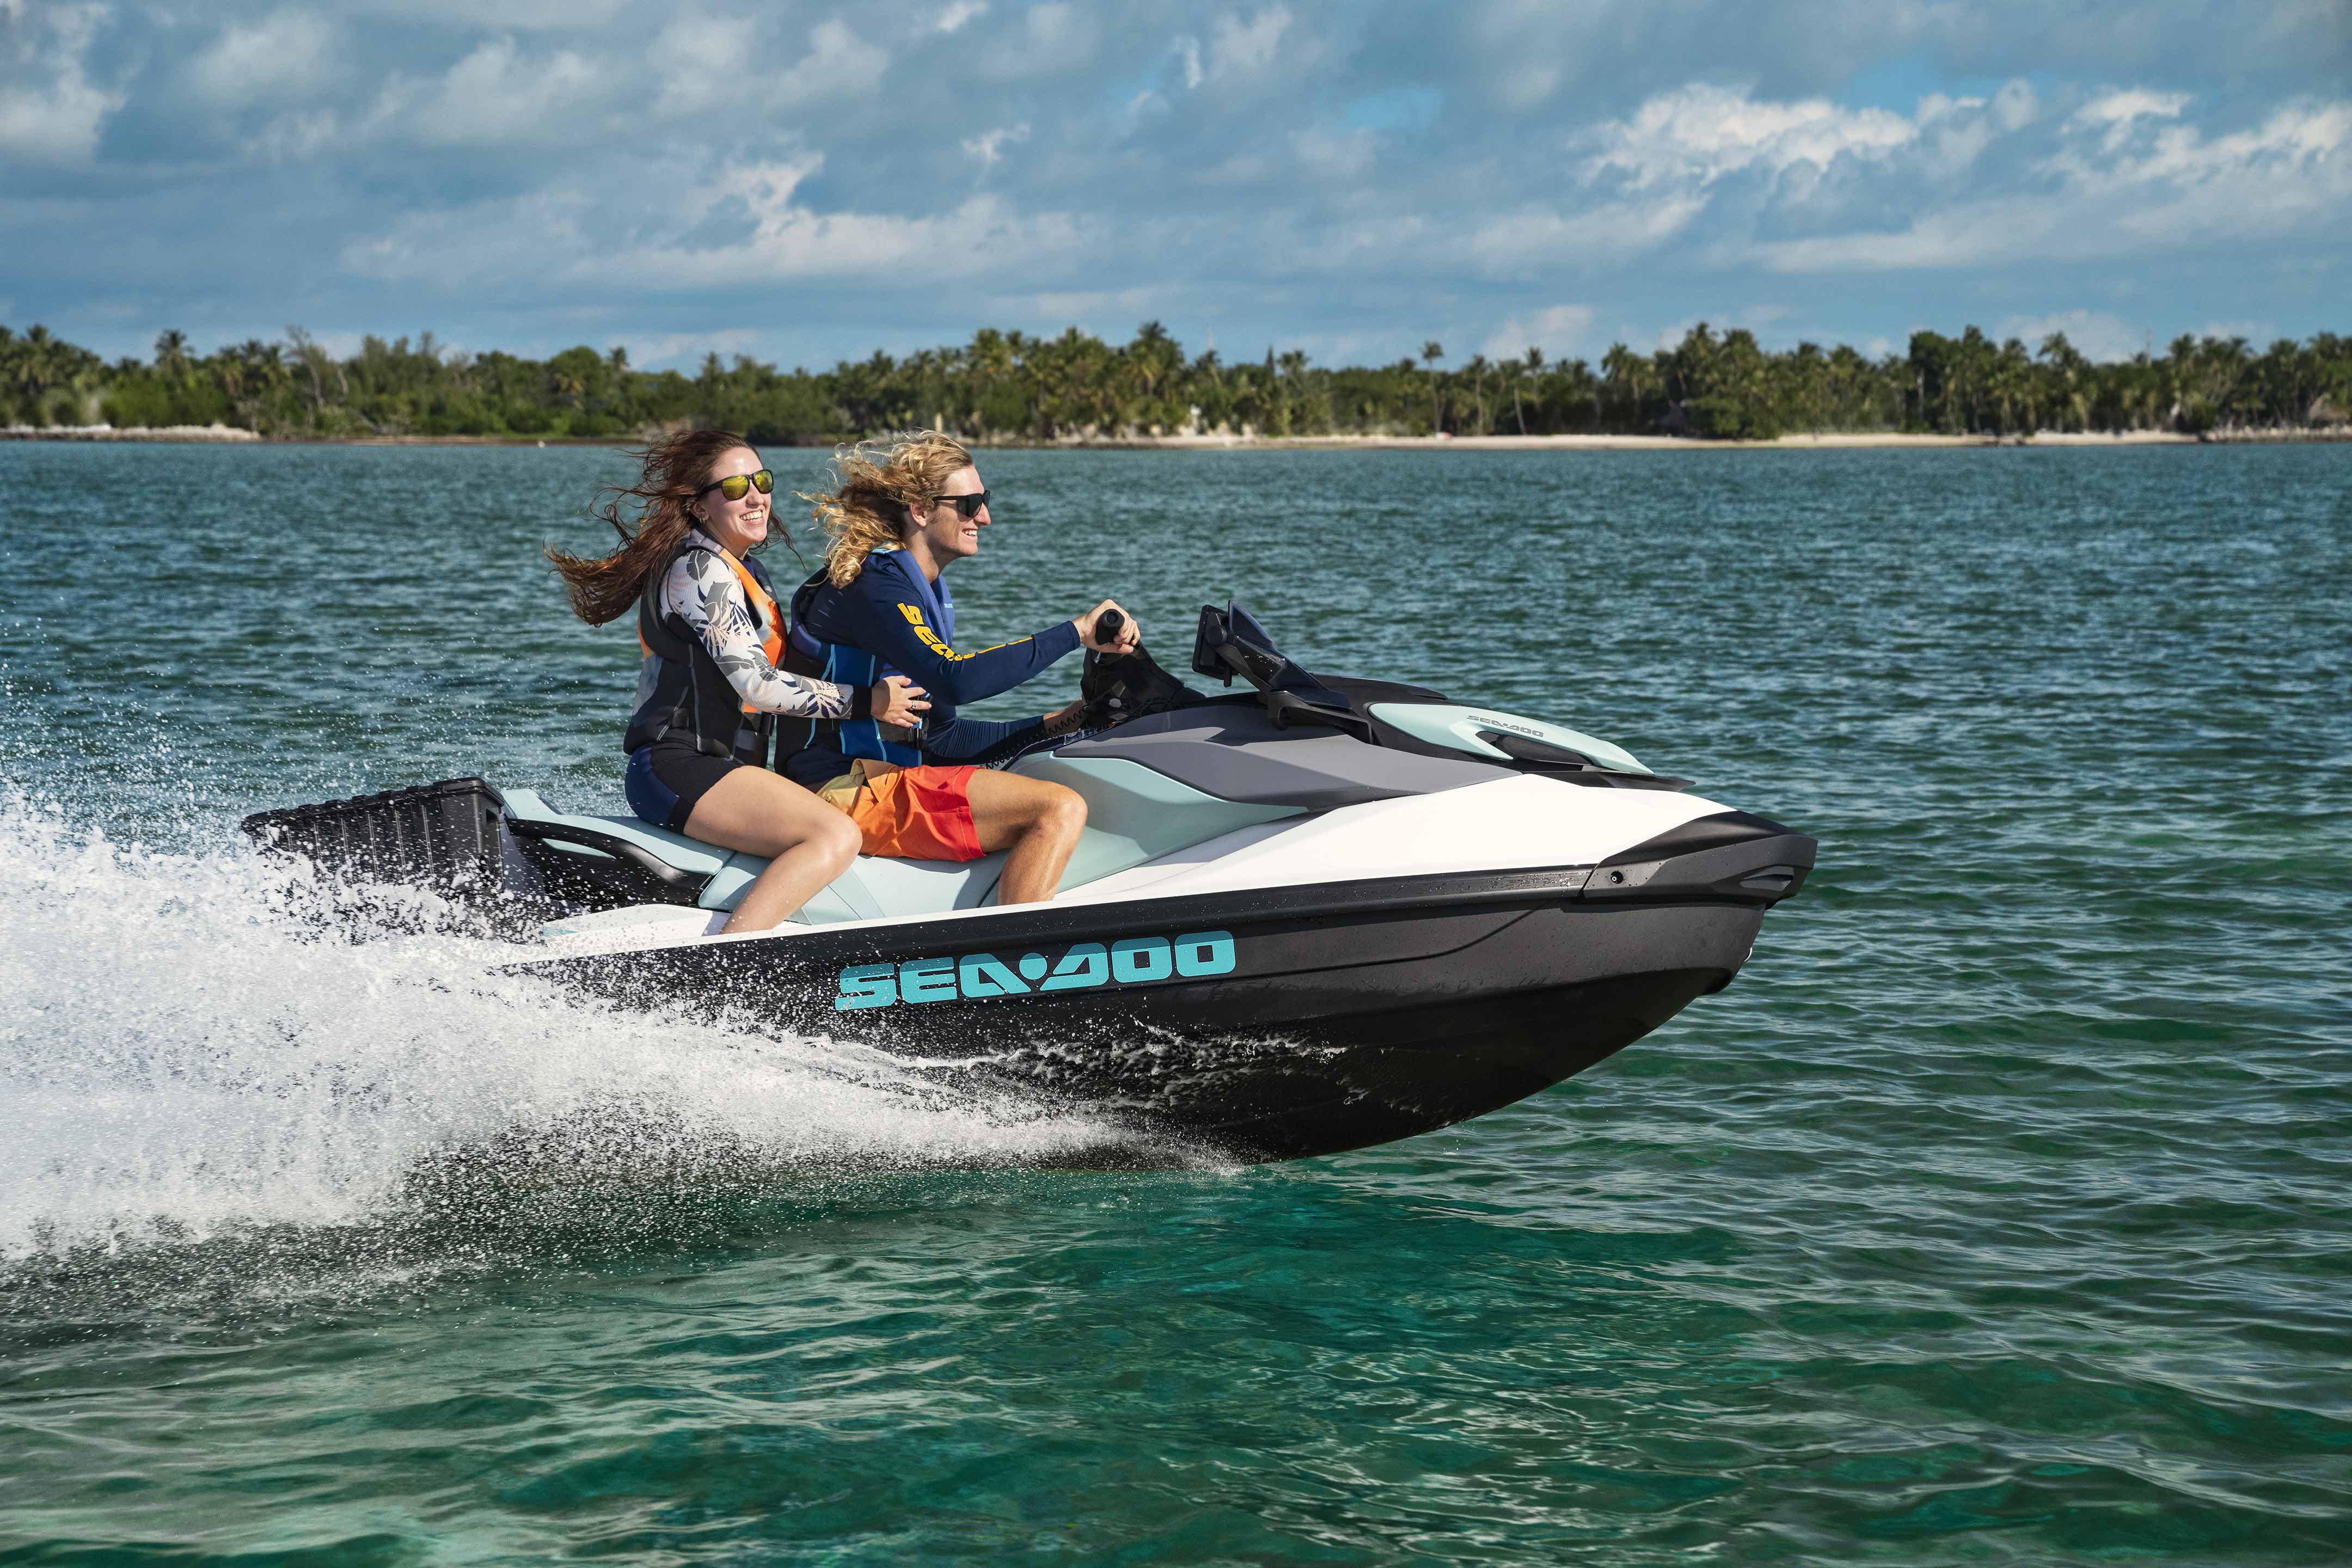 Two women riding on a Sea-Doo GTI 130 personal watercraft